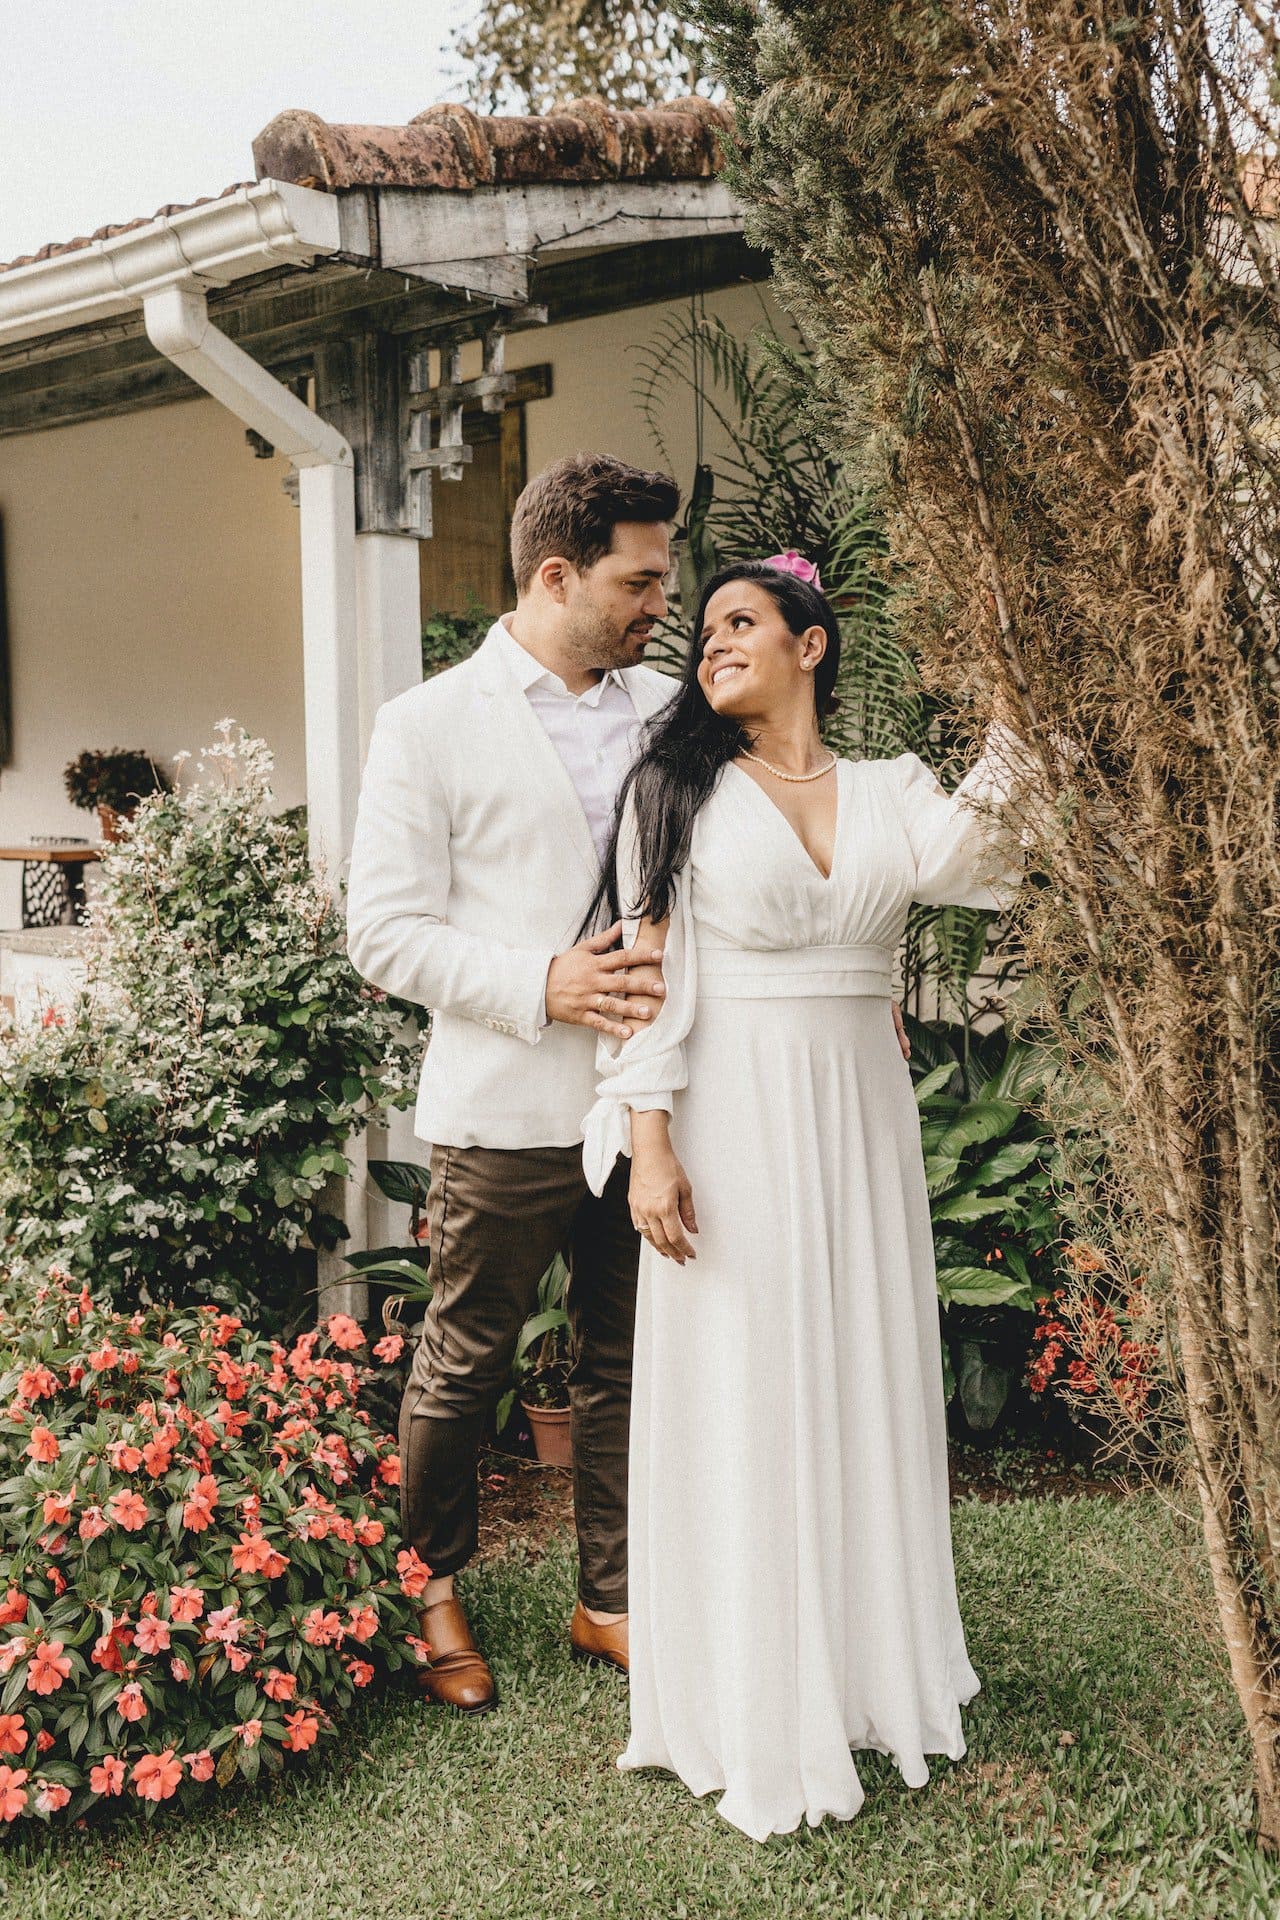 What to Wear to a Backyard Wedding